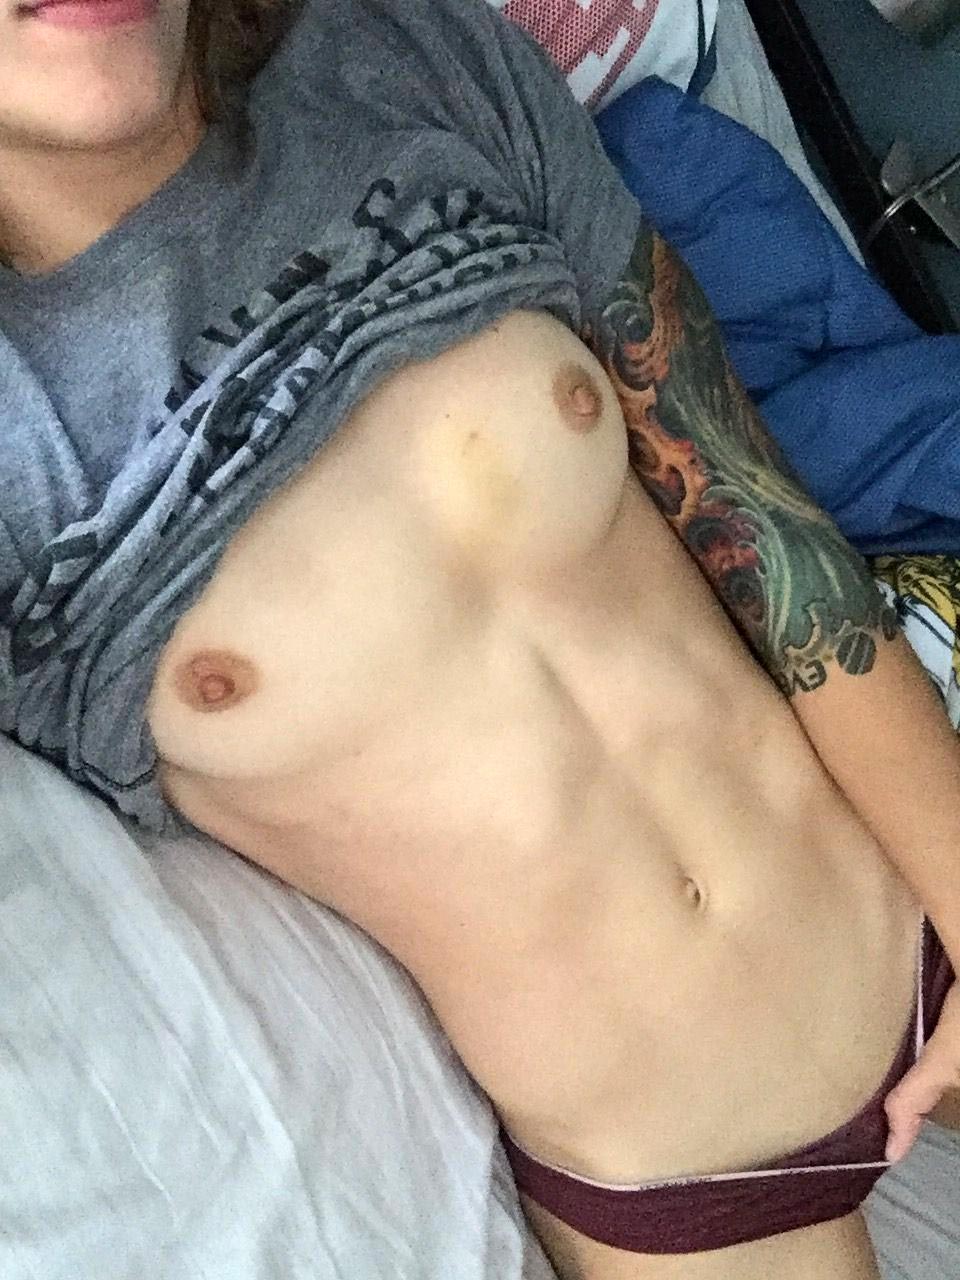 Jessamyn Duke Nude - Leaked Pics and Porn 20. 